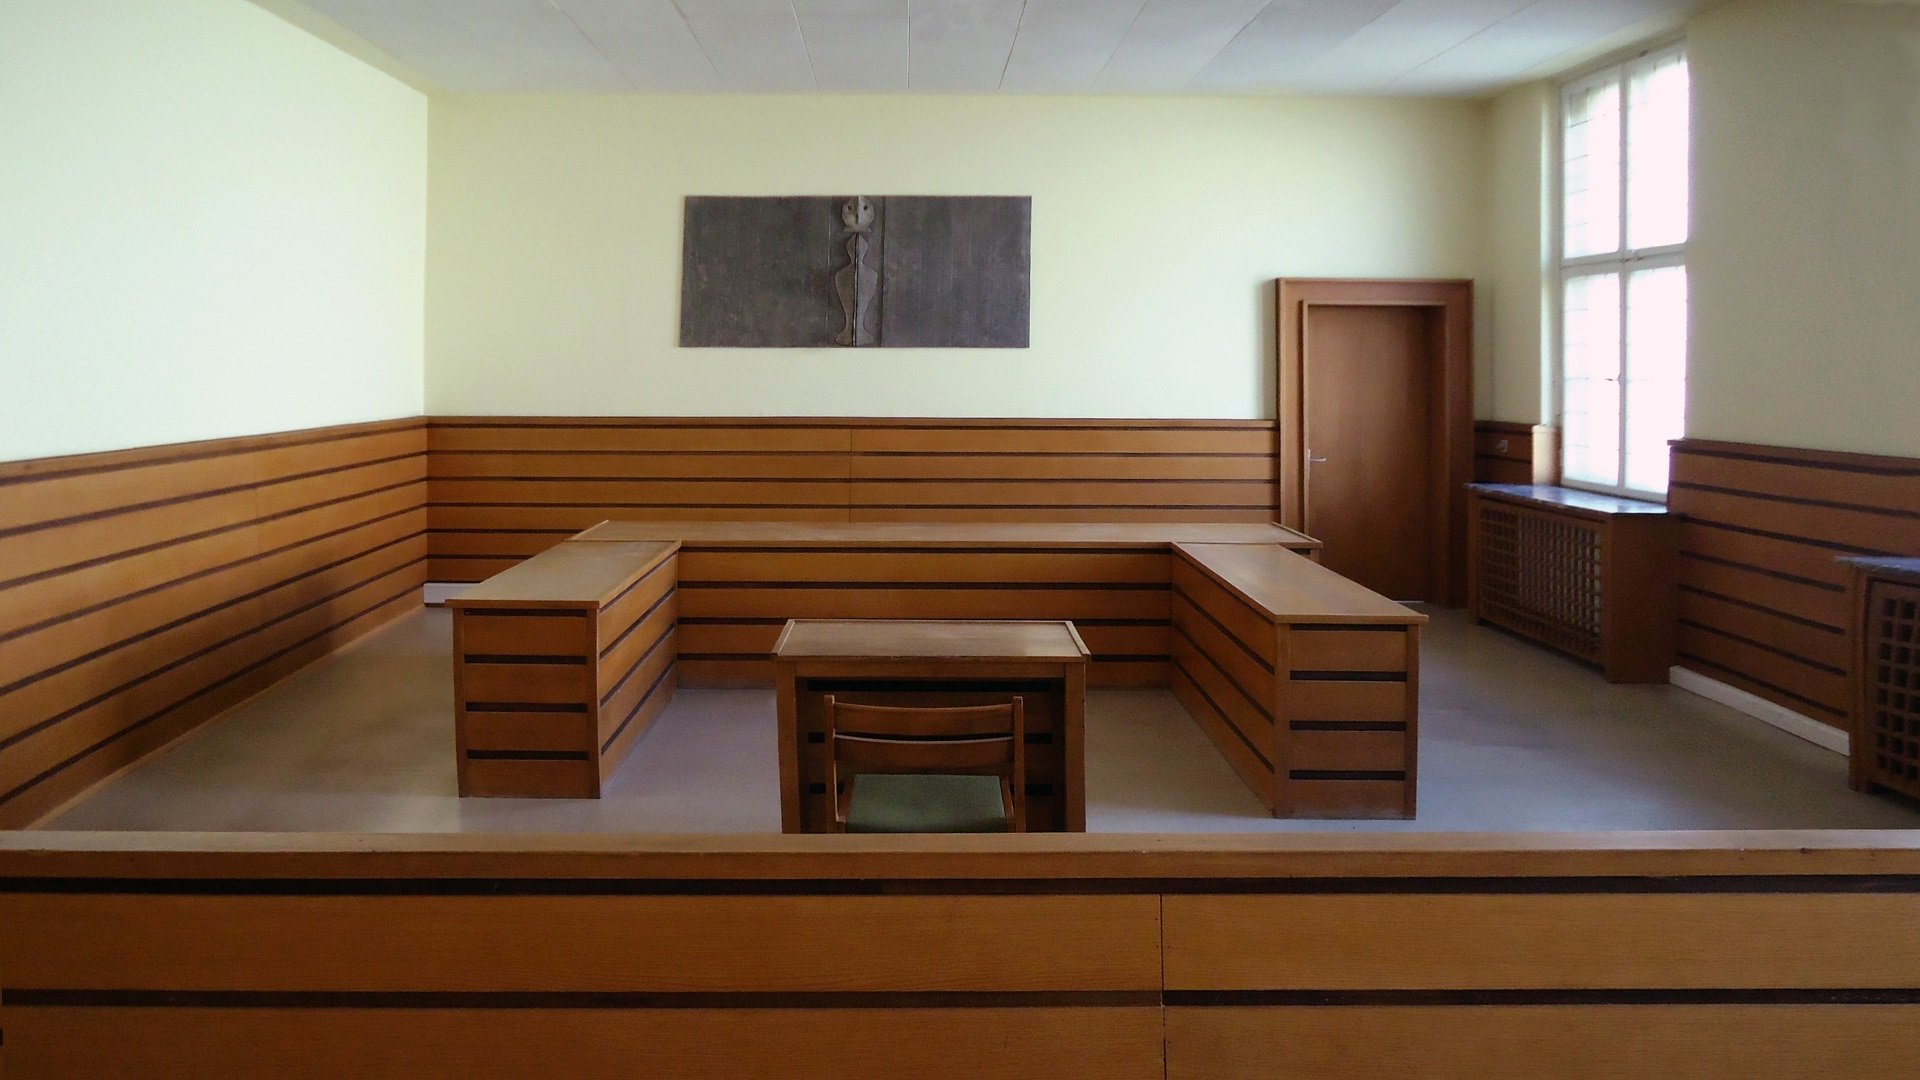 Ein leerer Gerichtssaal